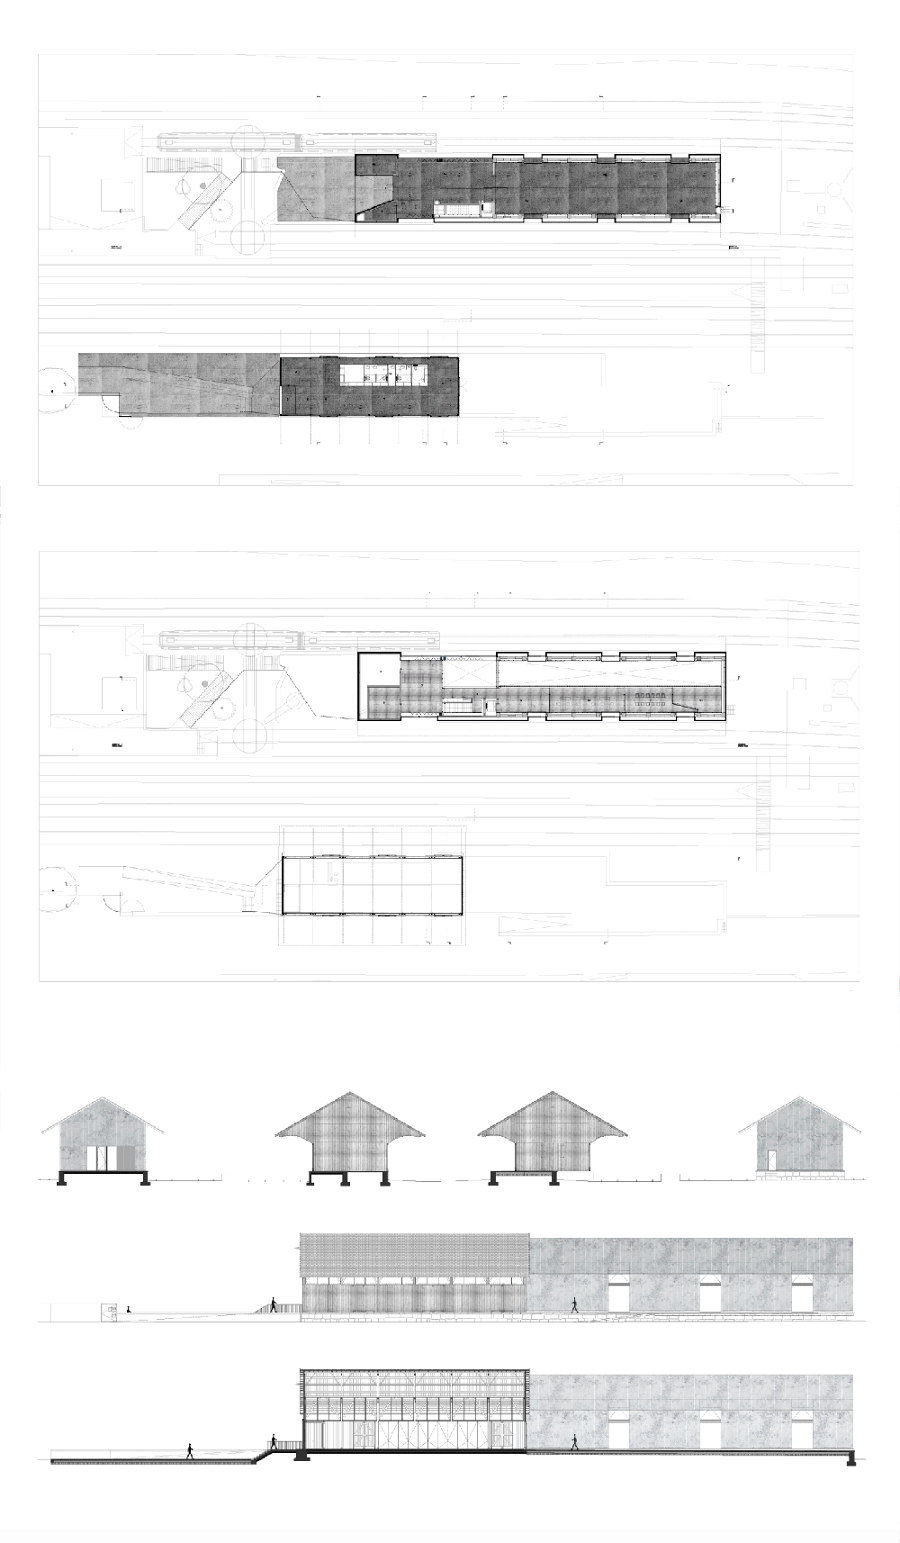 Tua Valley Interpretive Centre by Rosmaninho+Azevedo Architects | Railway stations